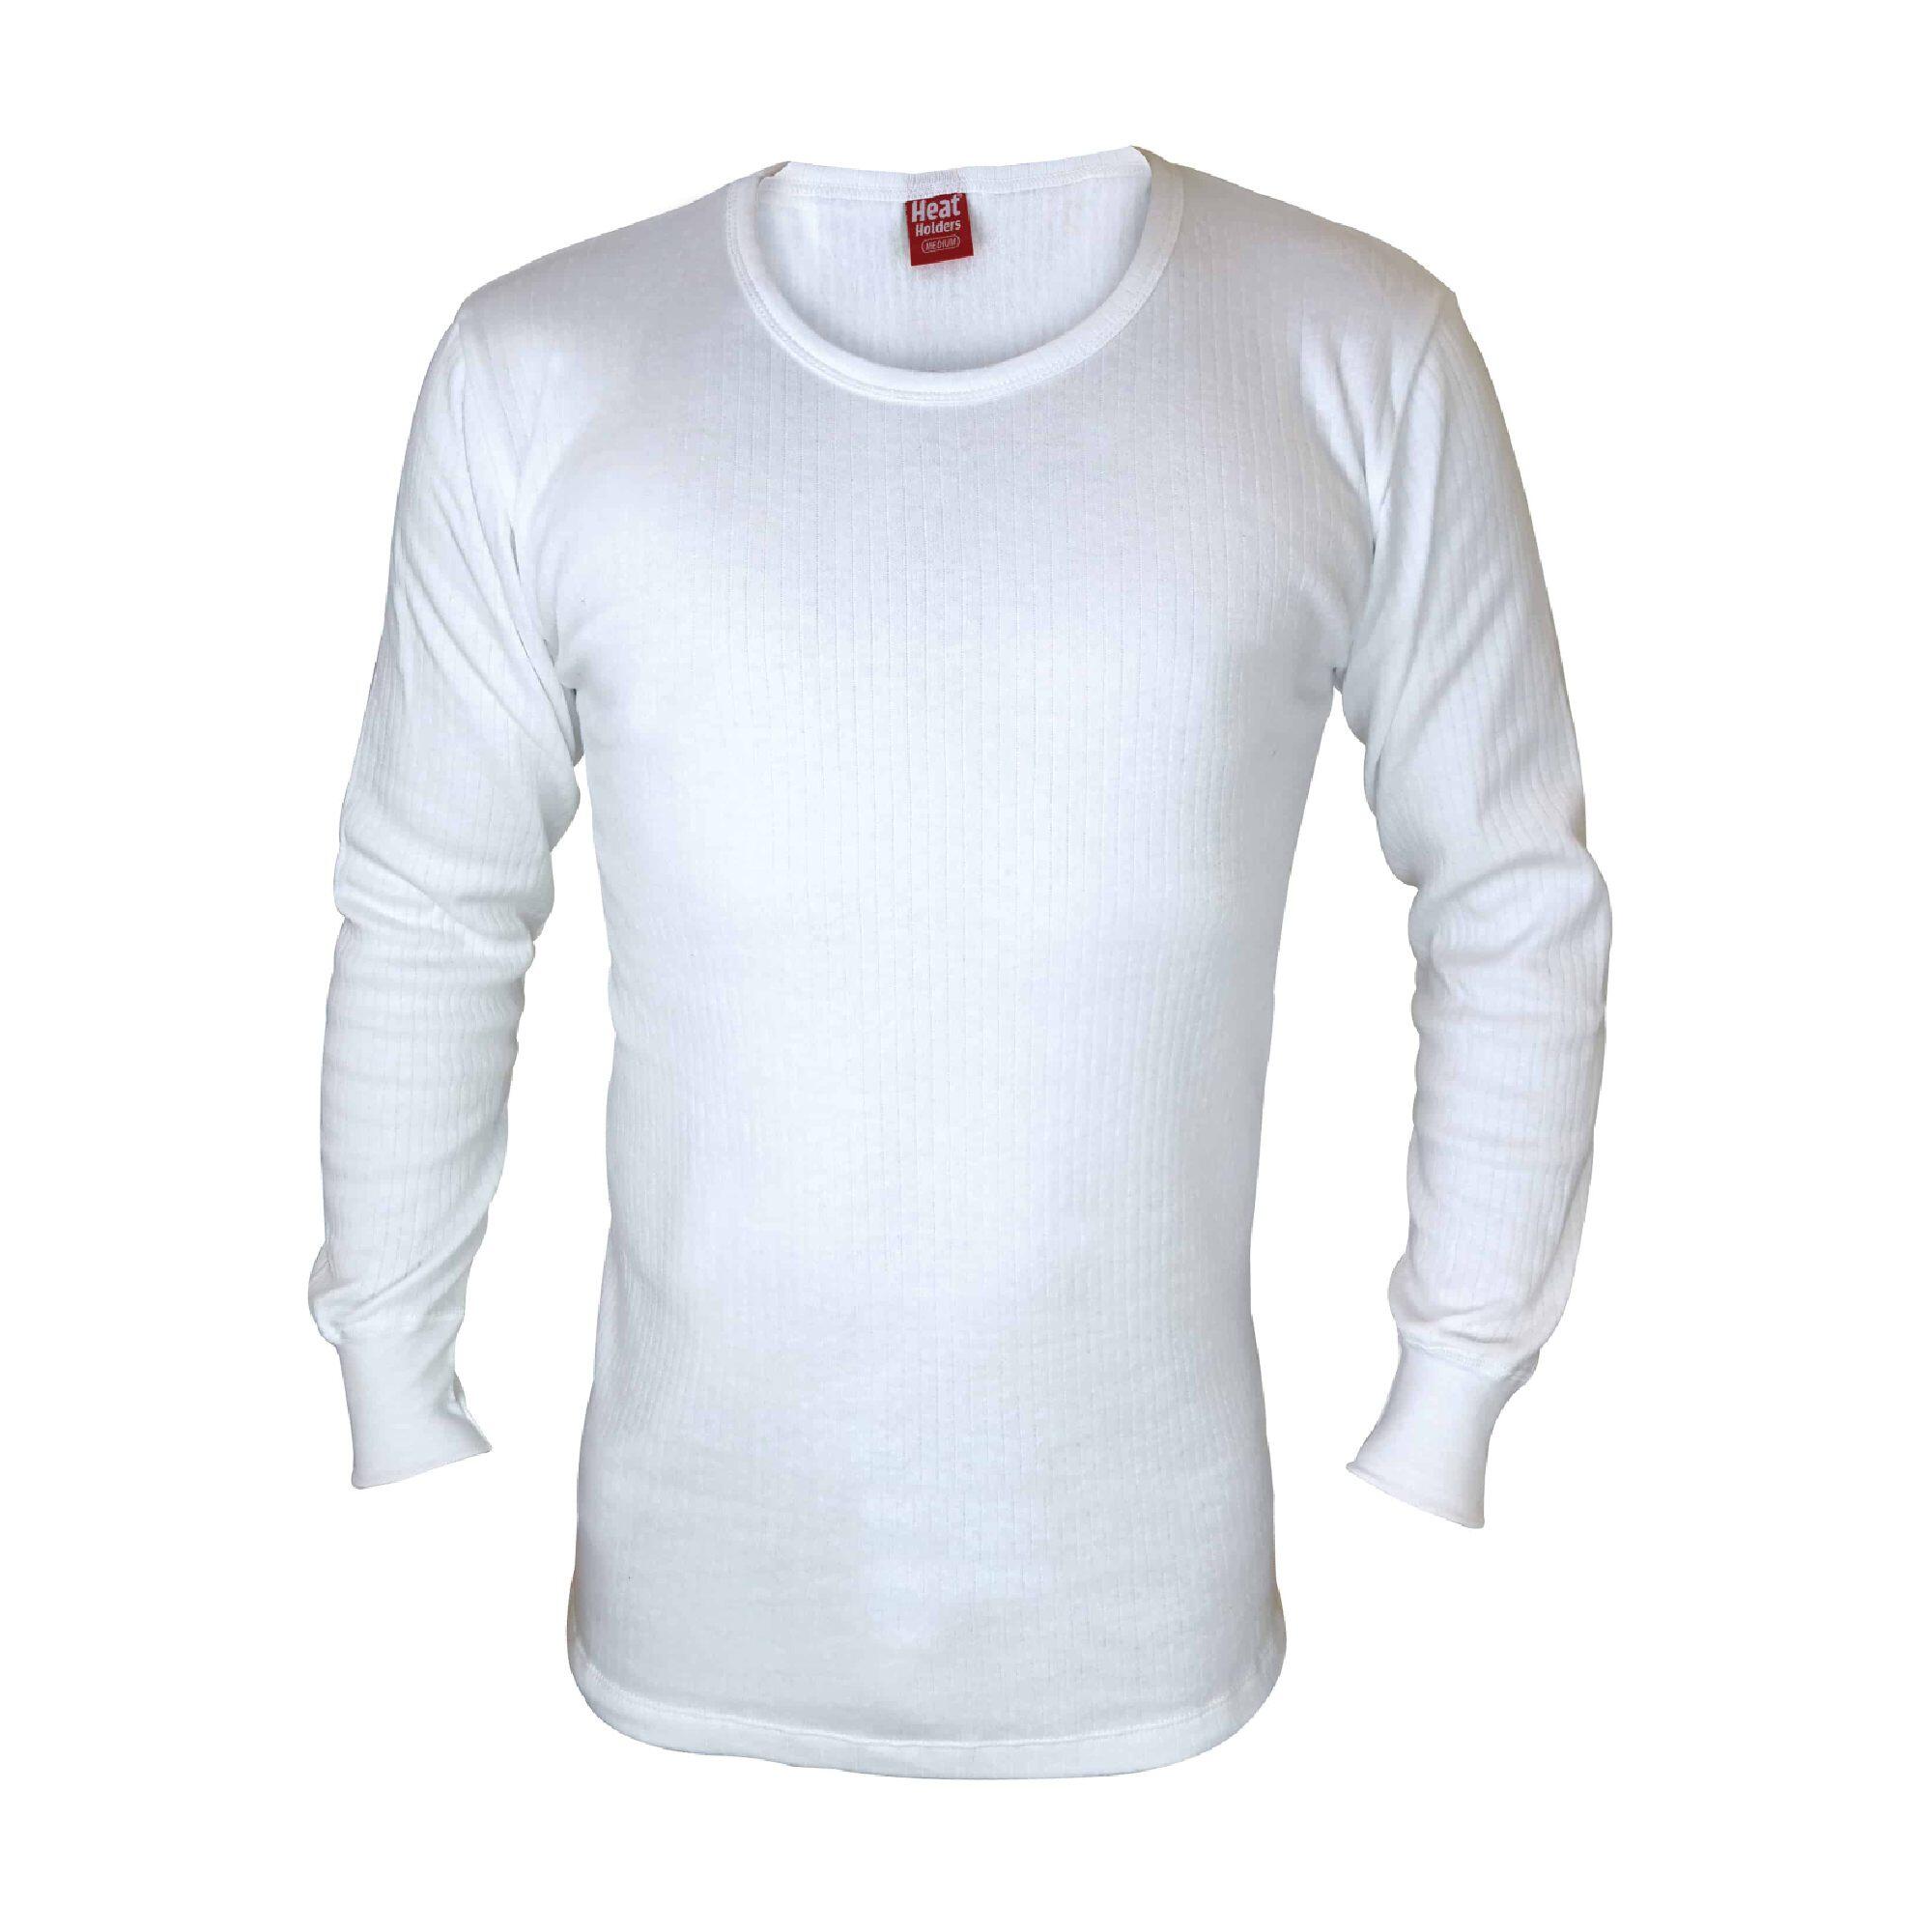 Mens Cotton Thermal Underwear Long Sleeve Top Vest 1/5